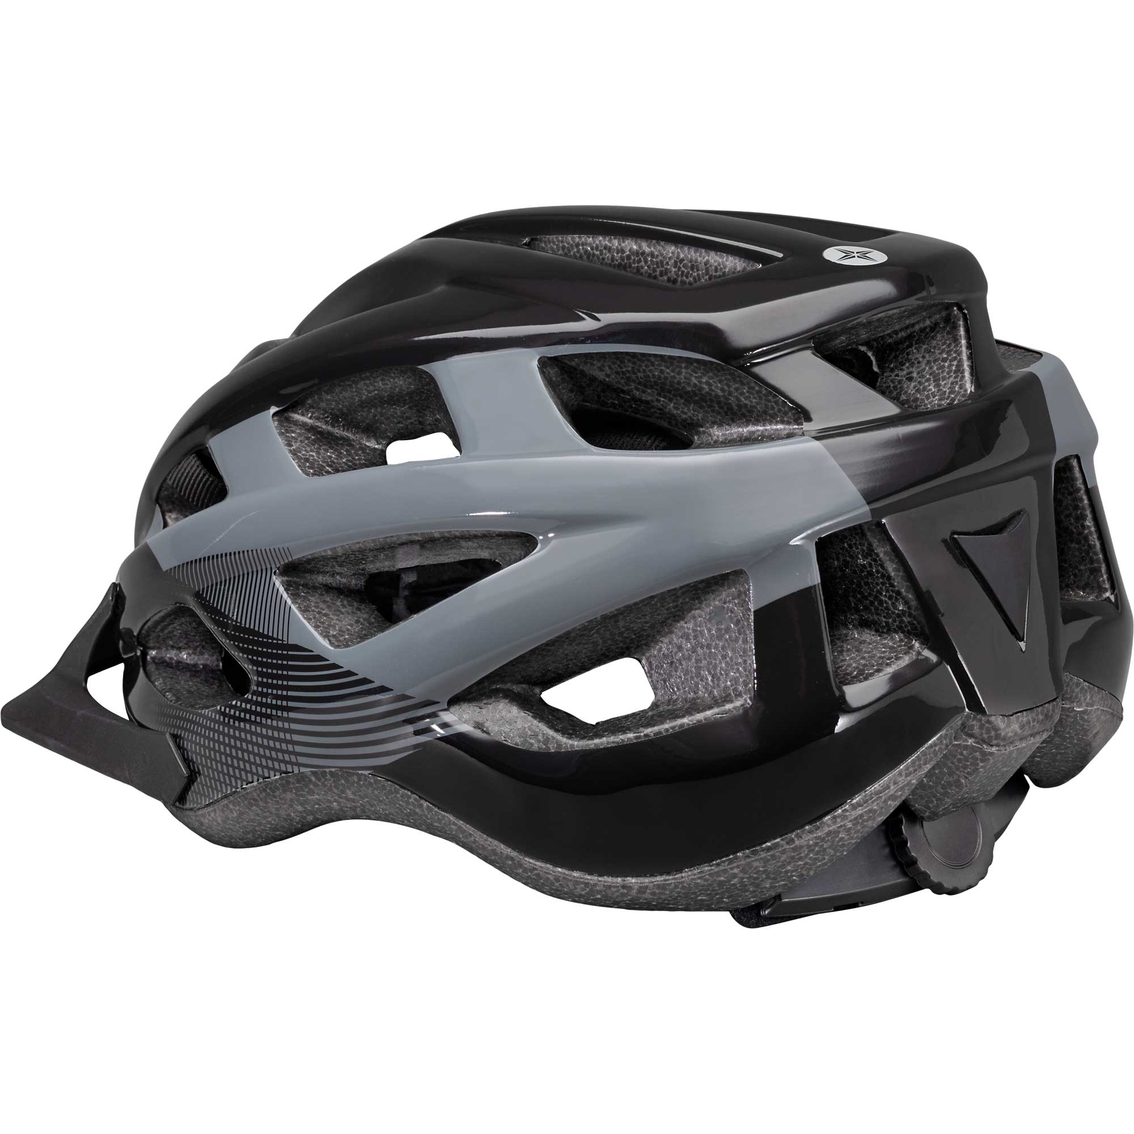 Schwinn Breeze Adult Bike Helmet, Black And Grey | Helmets & Pads ...